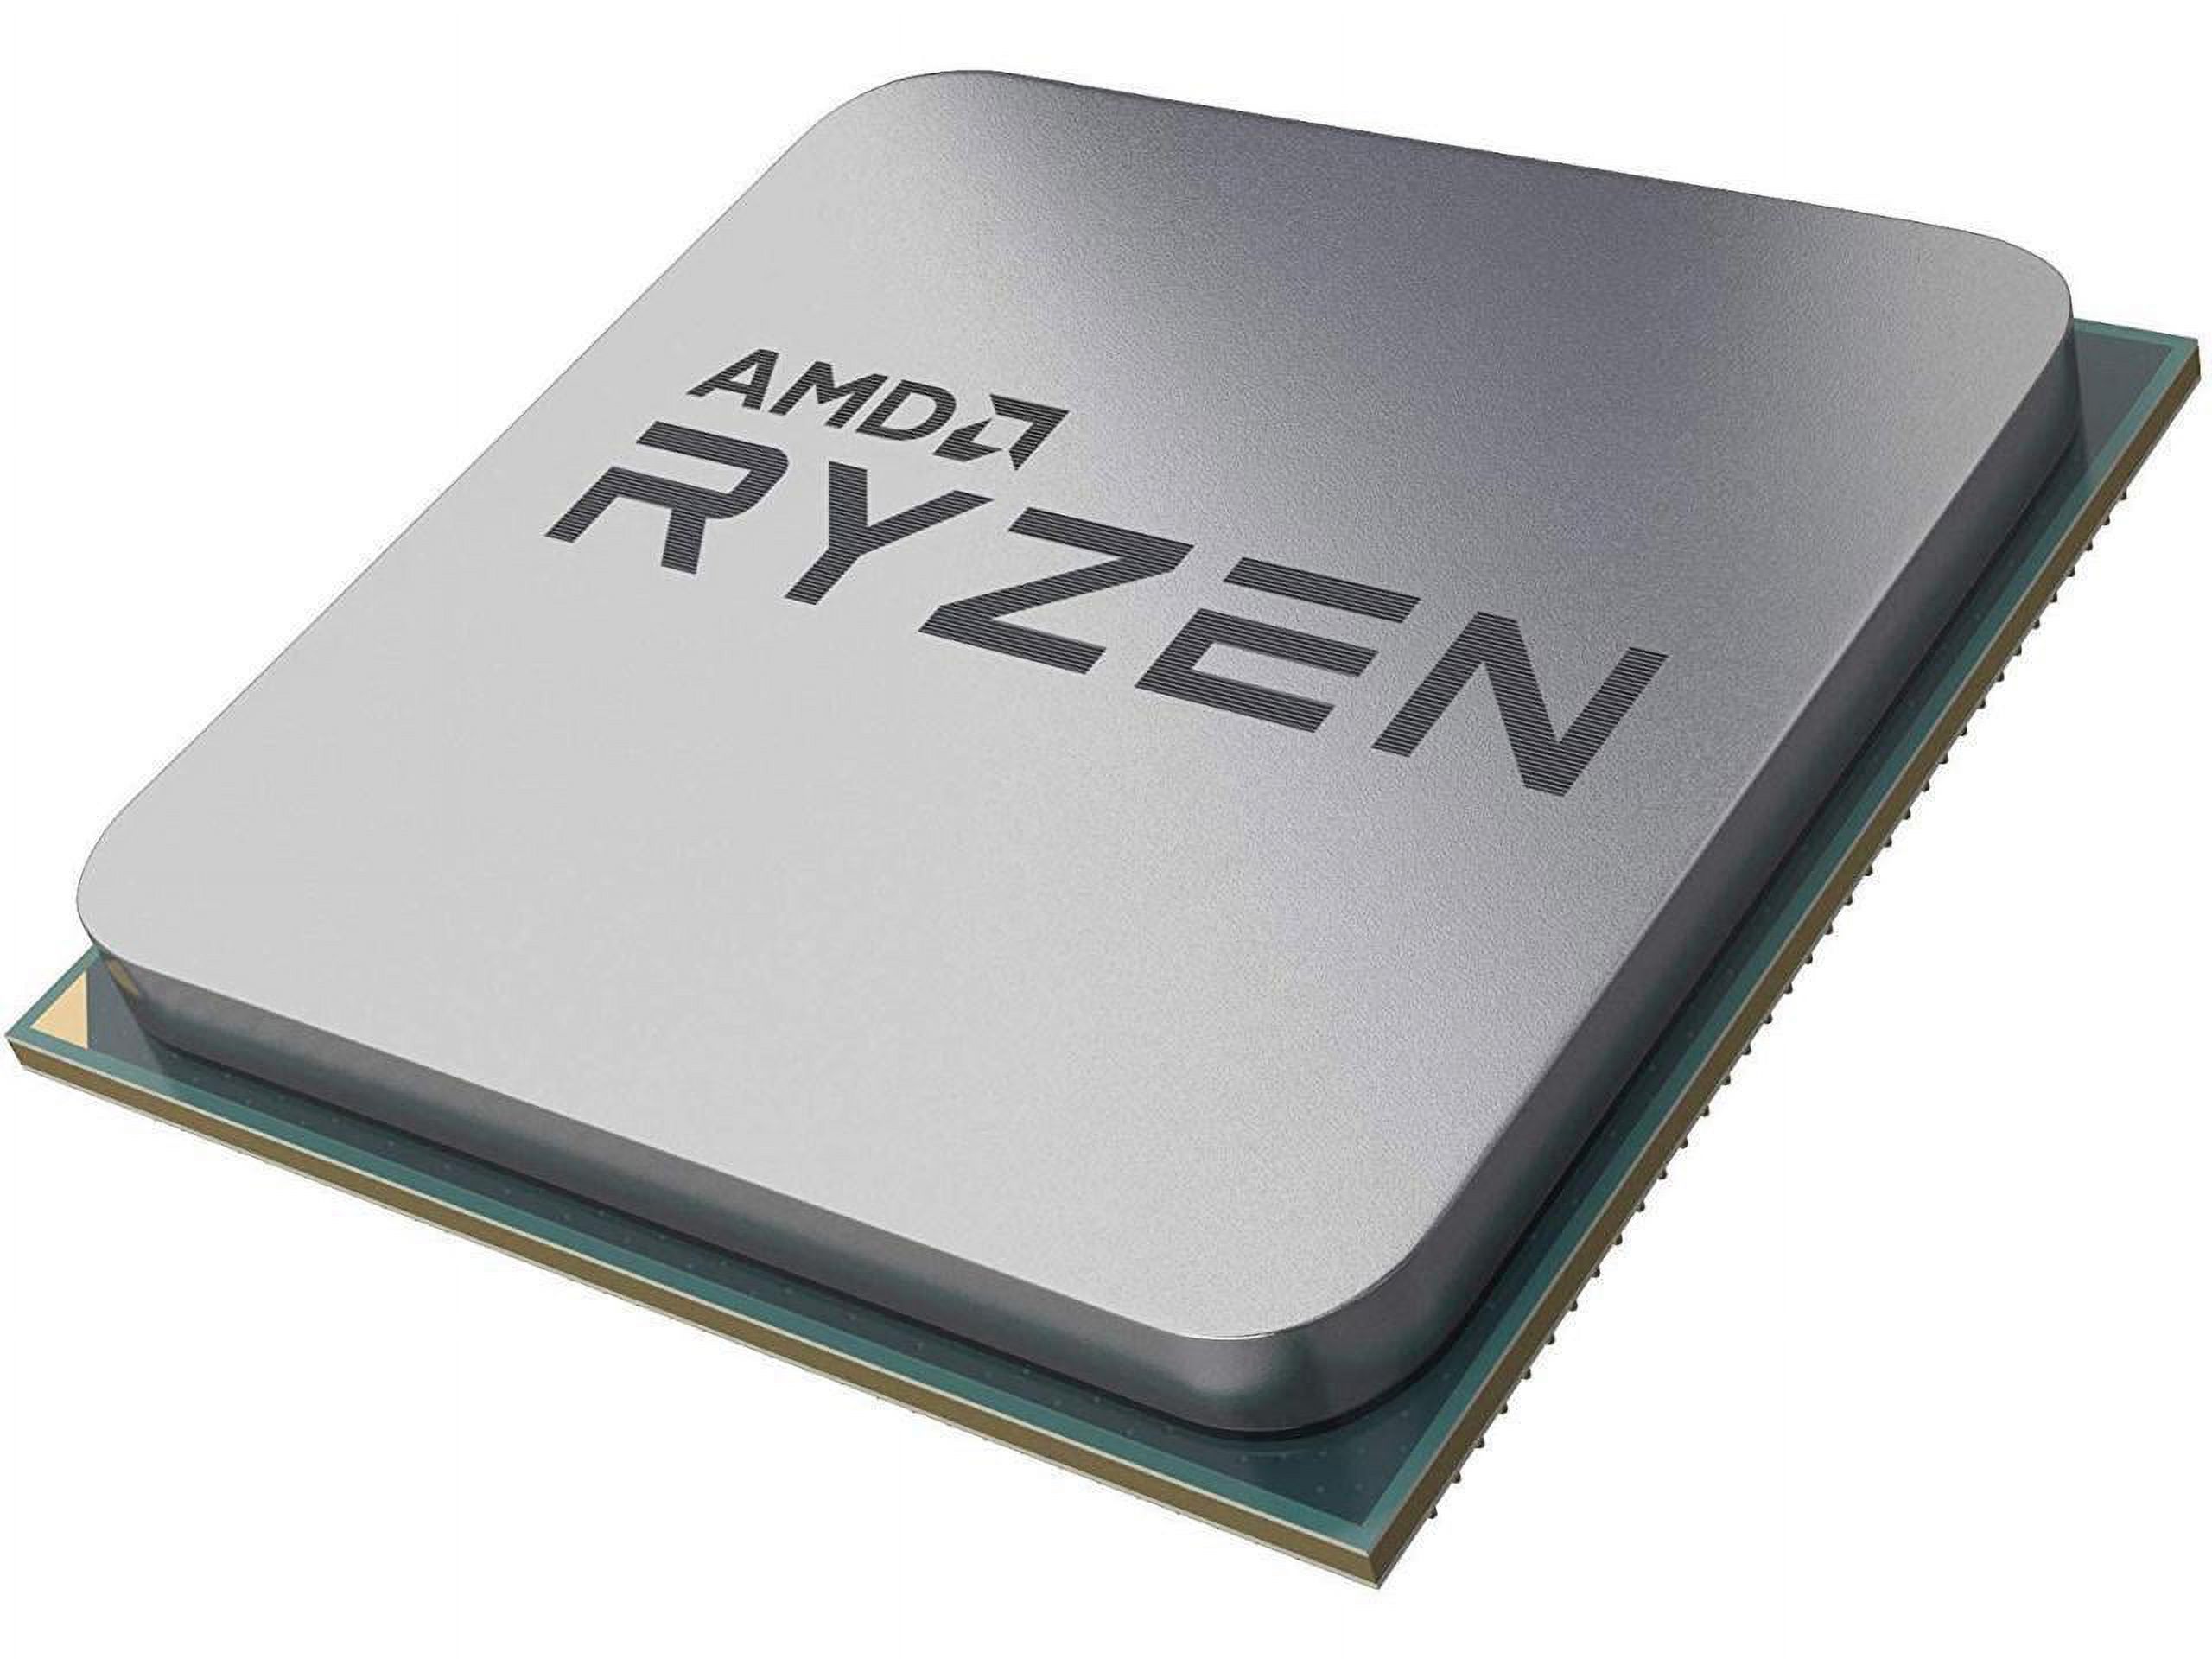 AMD Ryzen 3 4100 - Ryzen 3 4000 Series Quad-Core 3.8 GHz Socket AM4 65W None Integrated Graphics Desktop Processor - 100-100000510BOX - image 3 of 5